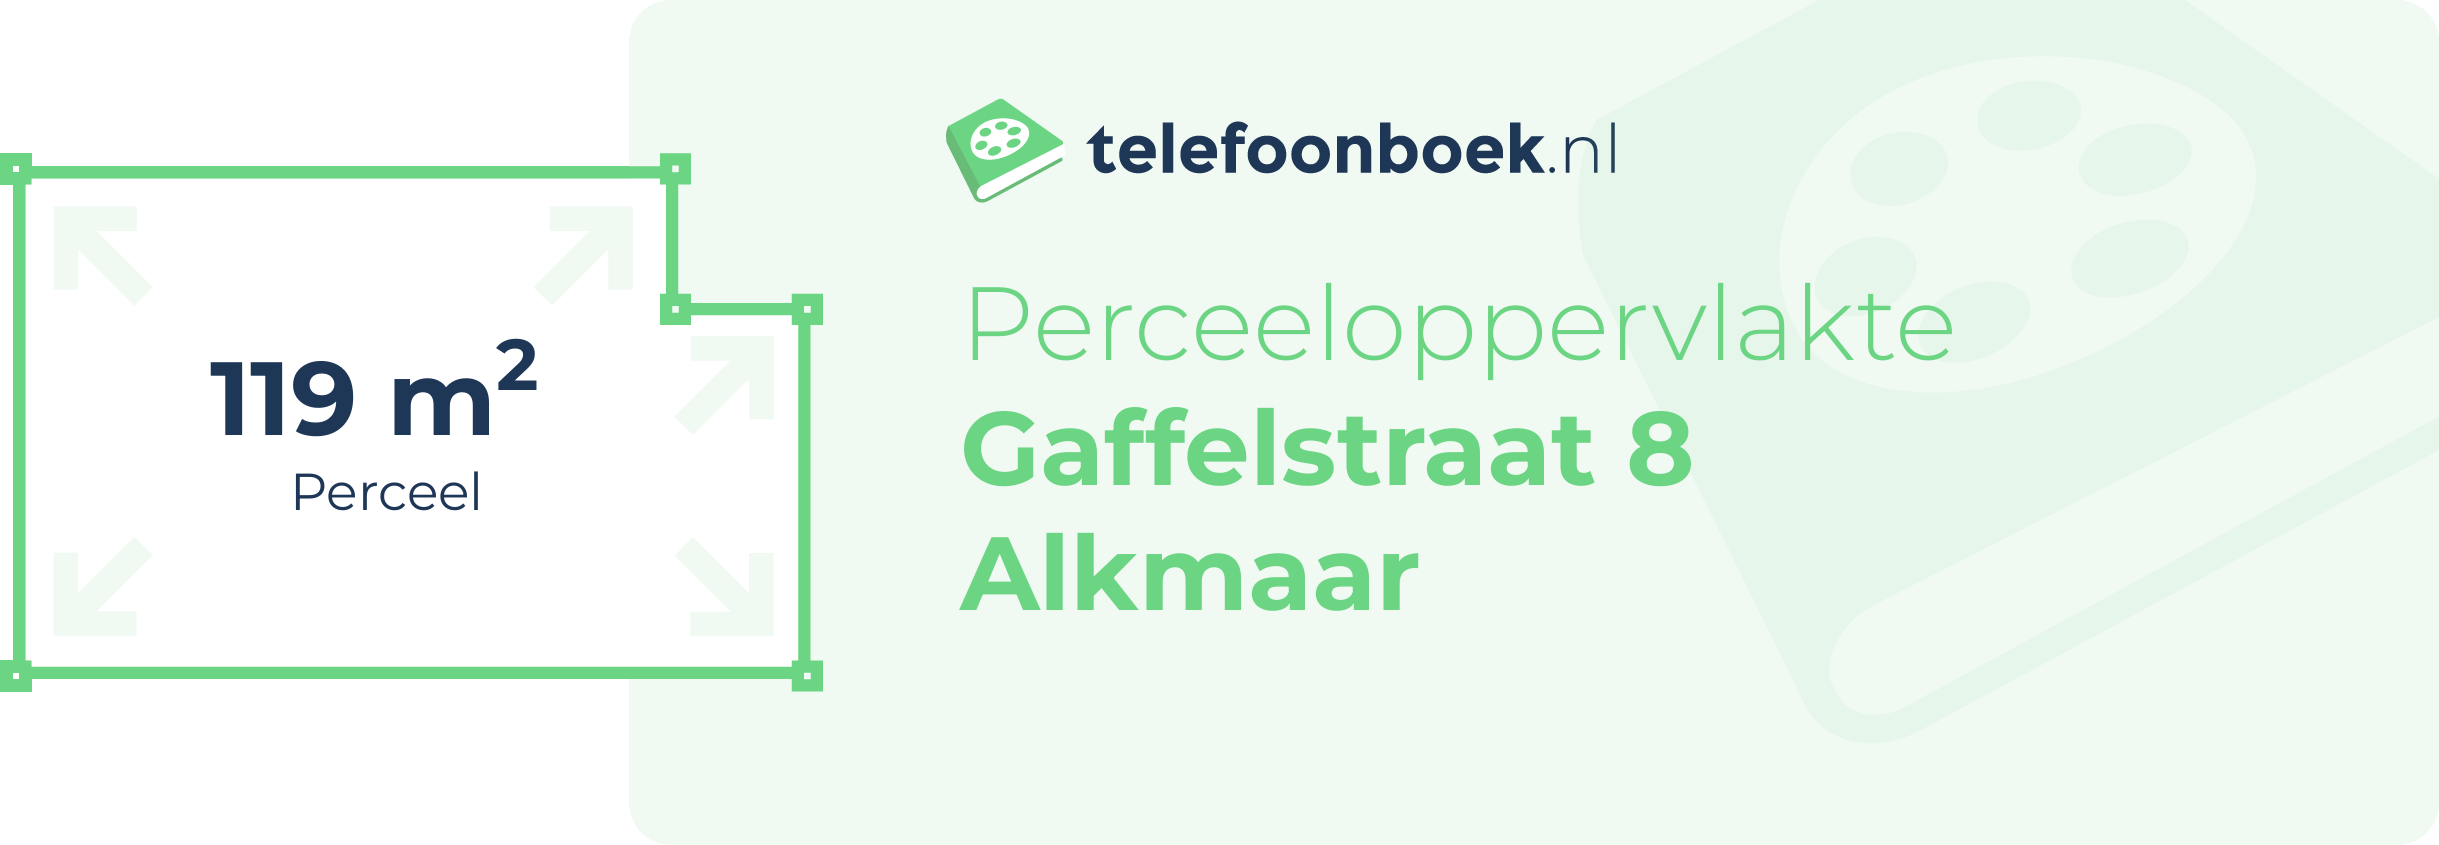 Perceeloppervlakte Gaffelstraat 8 Alkmaar